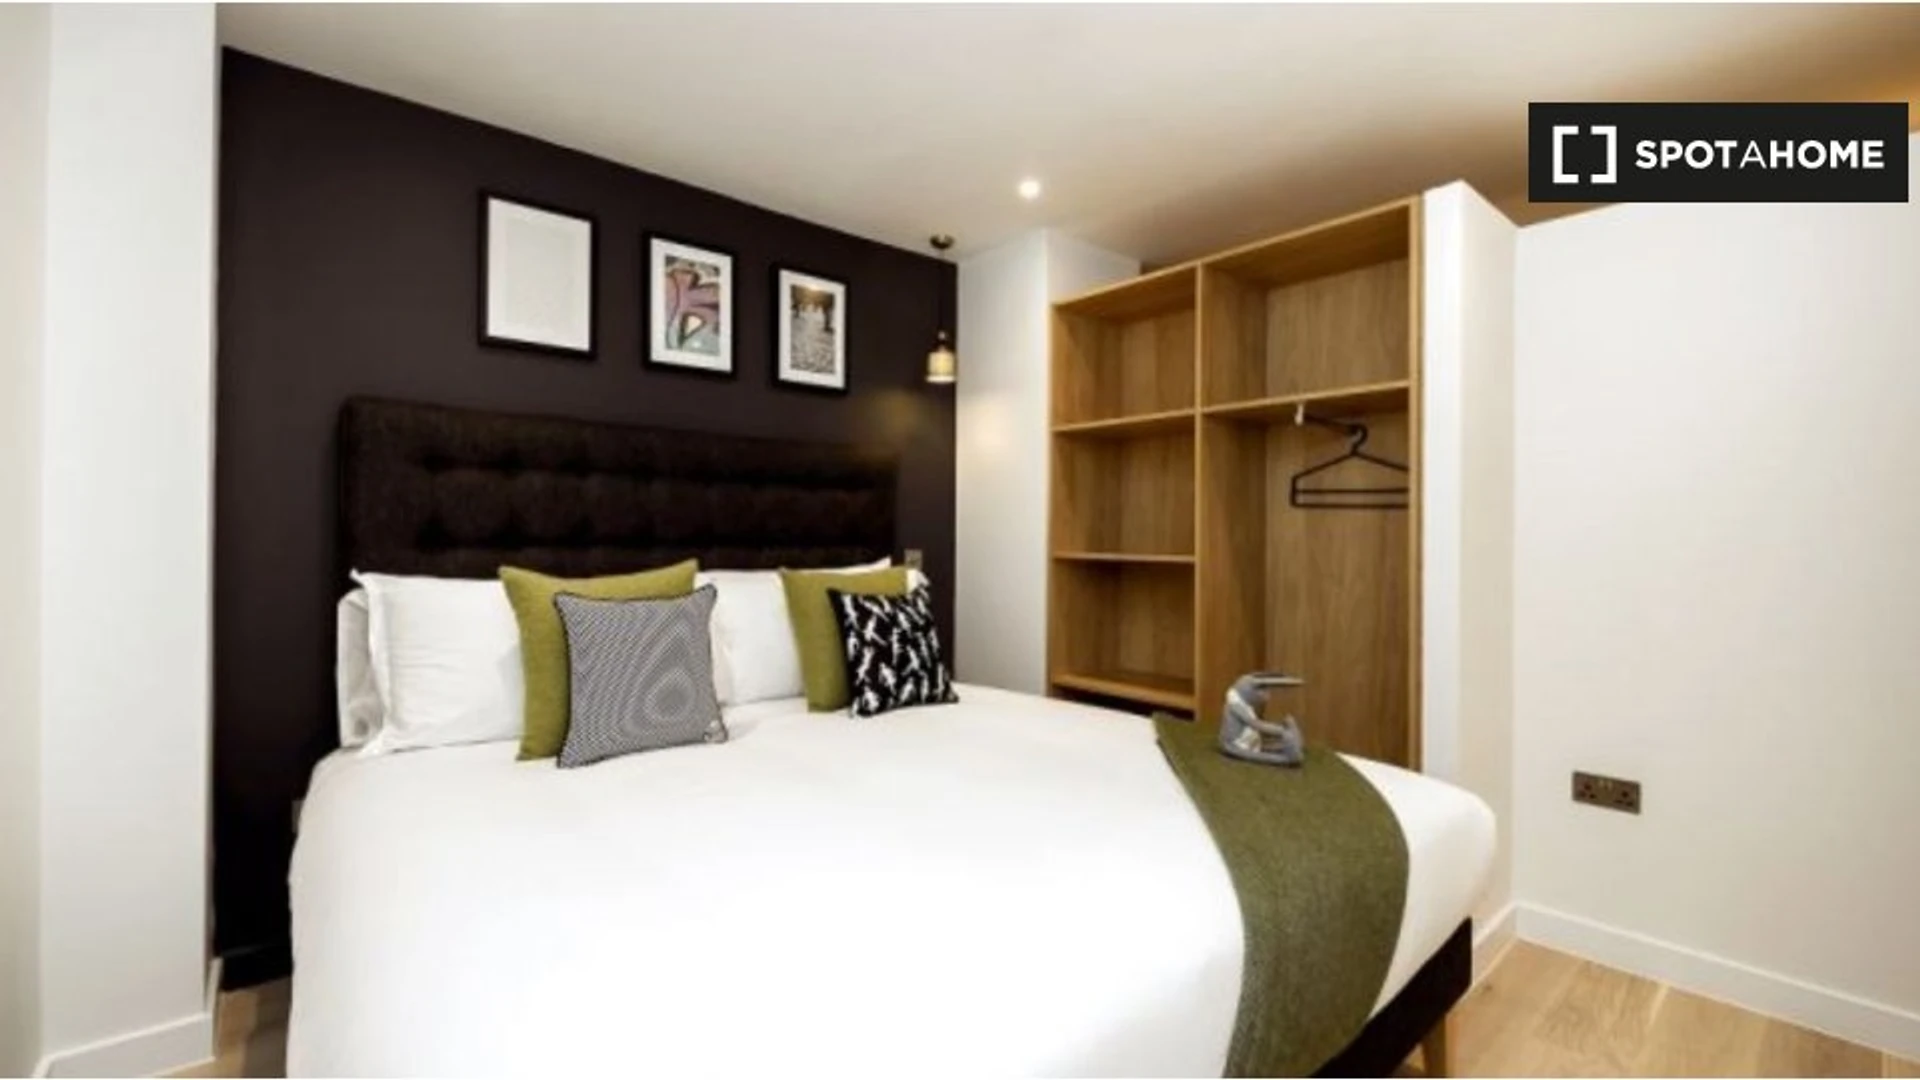 Two bedroom accommodation in Edinburgh